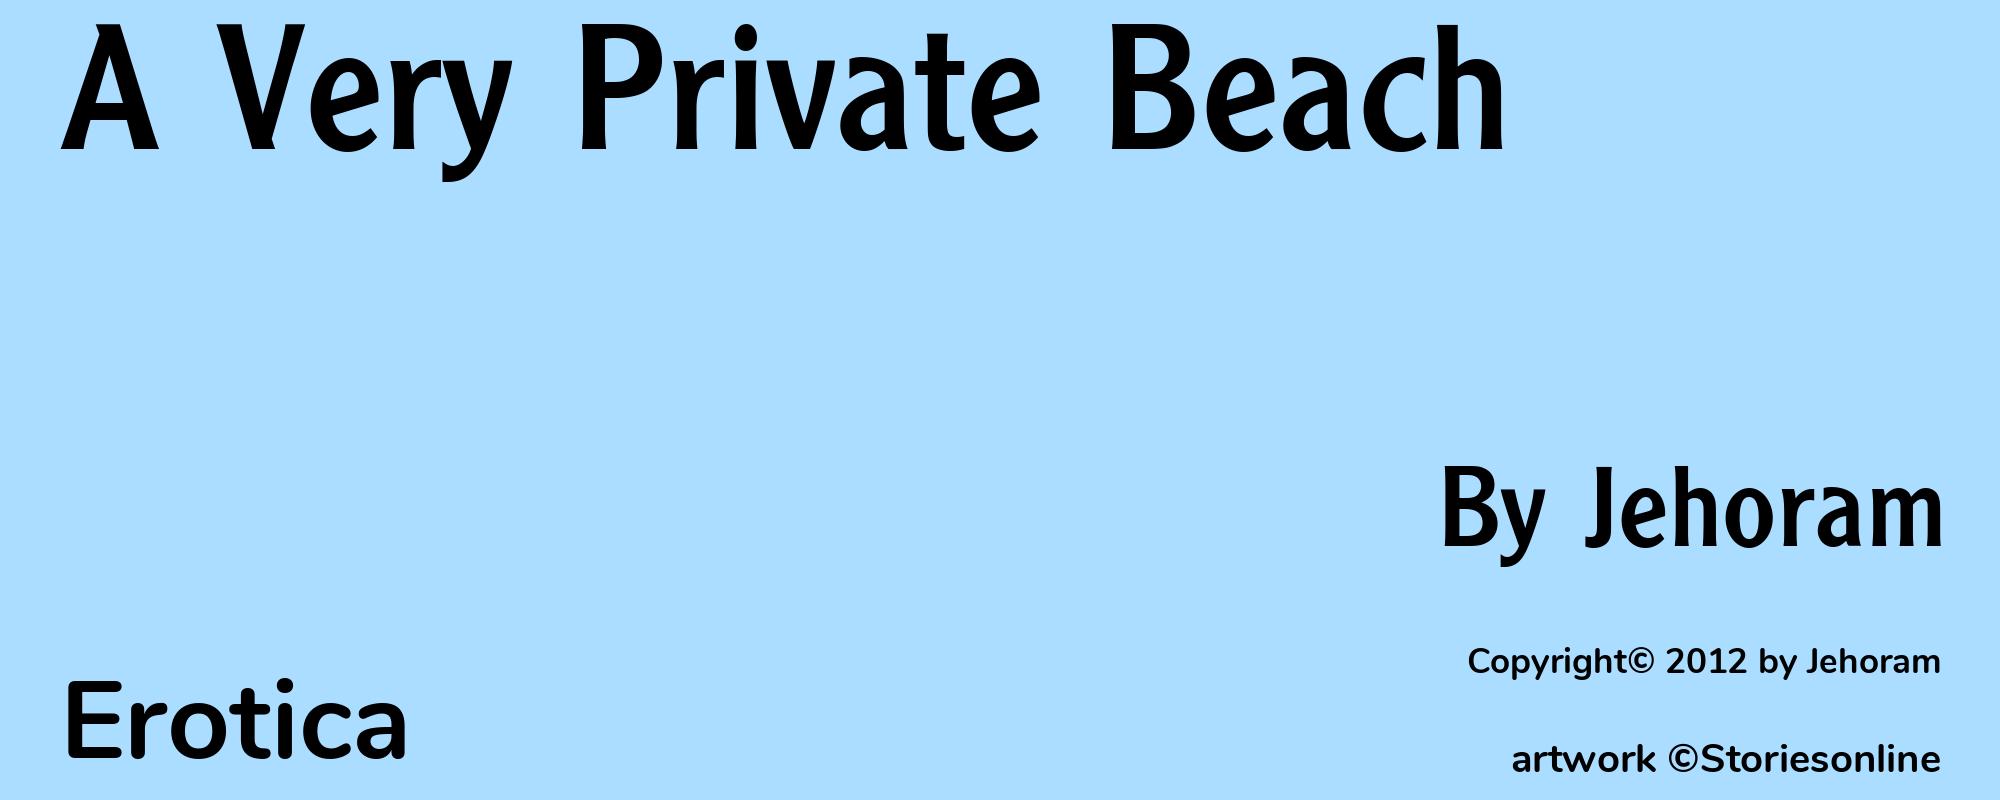 A Very Private Beach - Cover